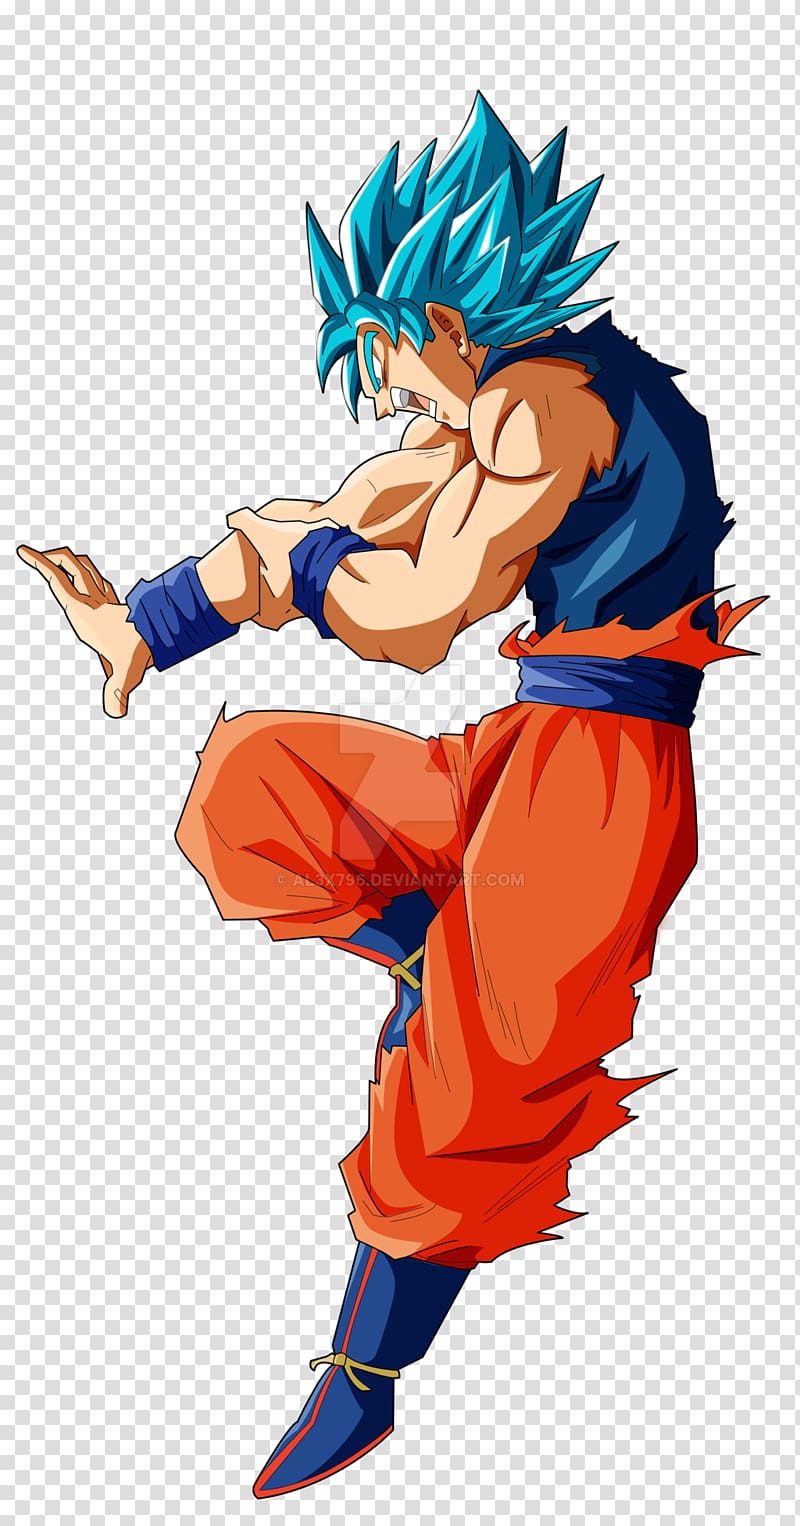 Son Goku illustration, Goku Vegeta Beerus Gohan Super Saiya, dragon ball transparent background PNG clipart